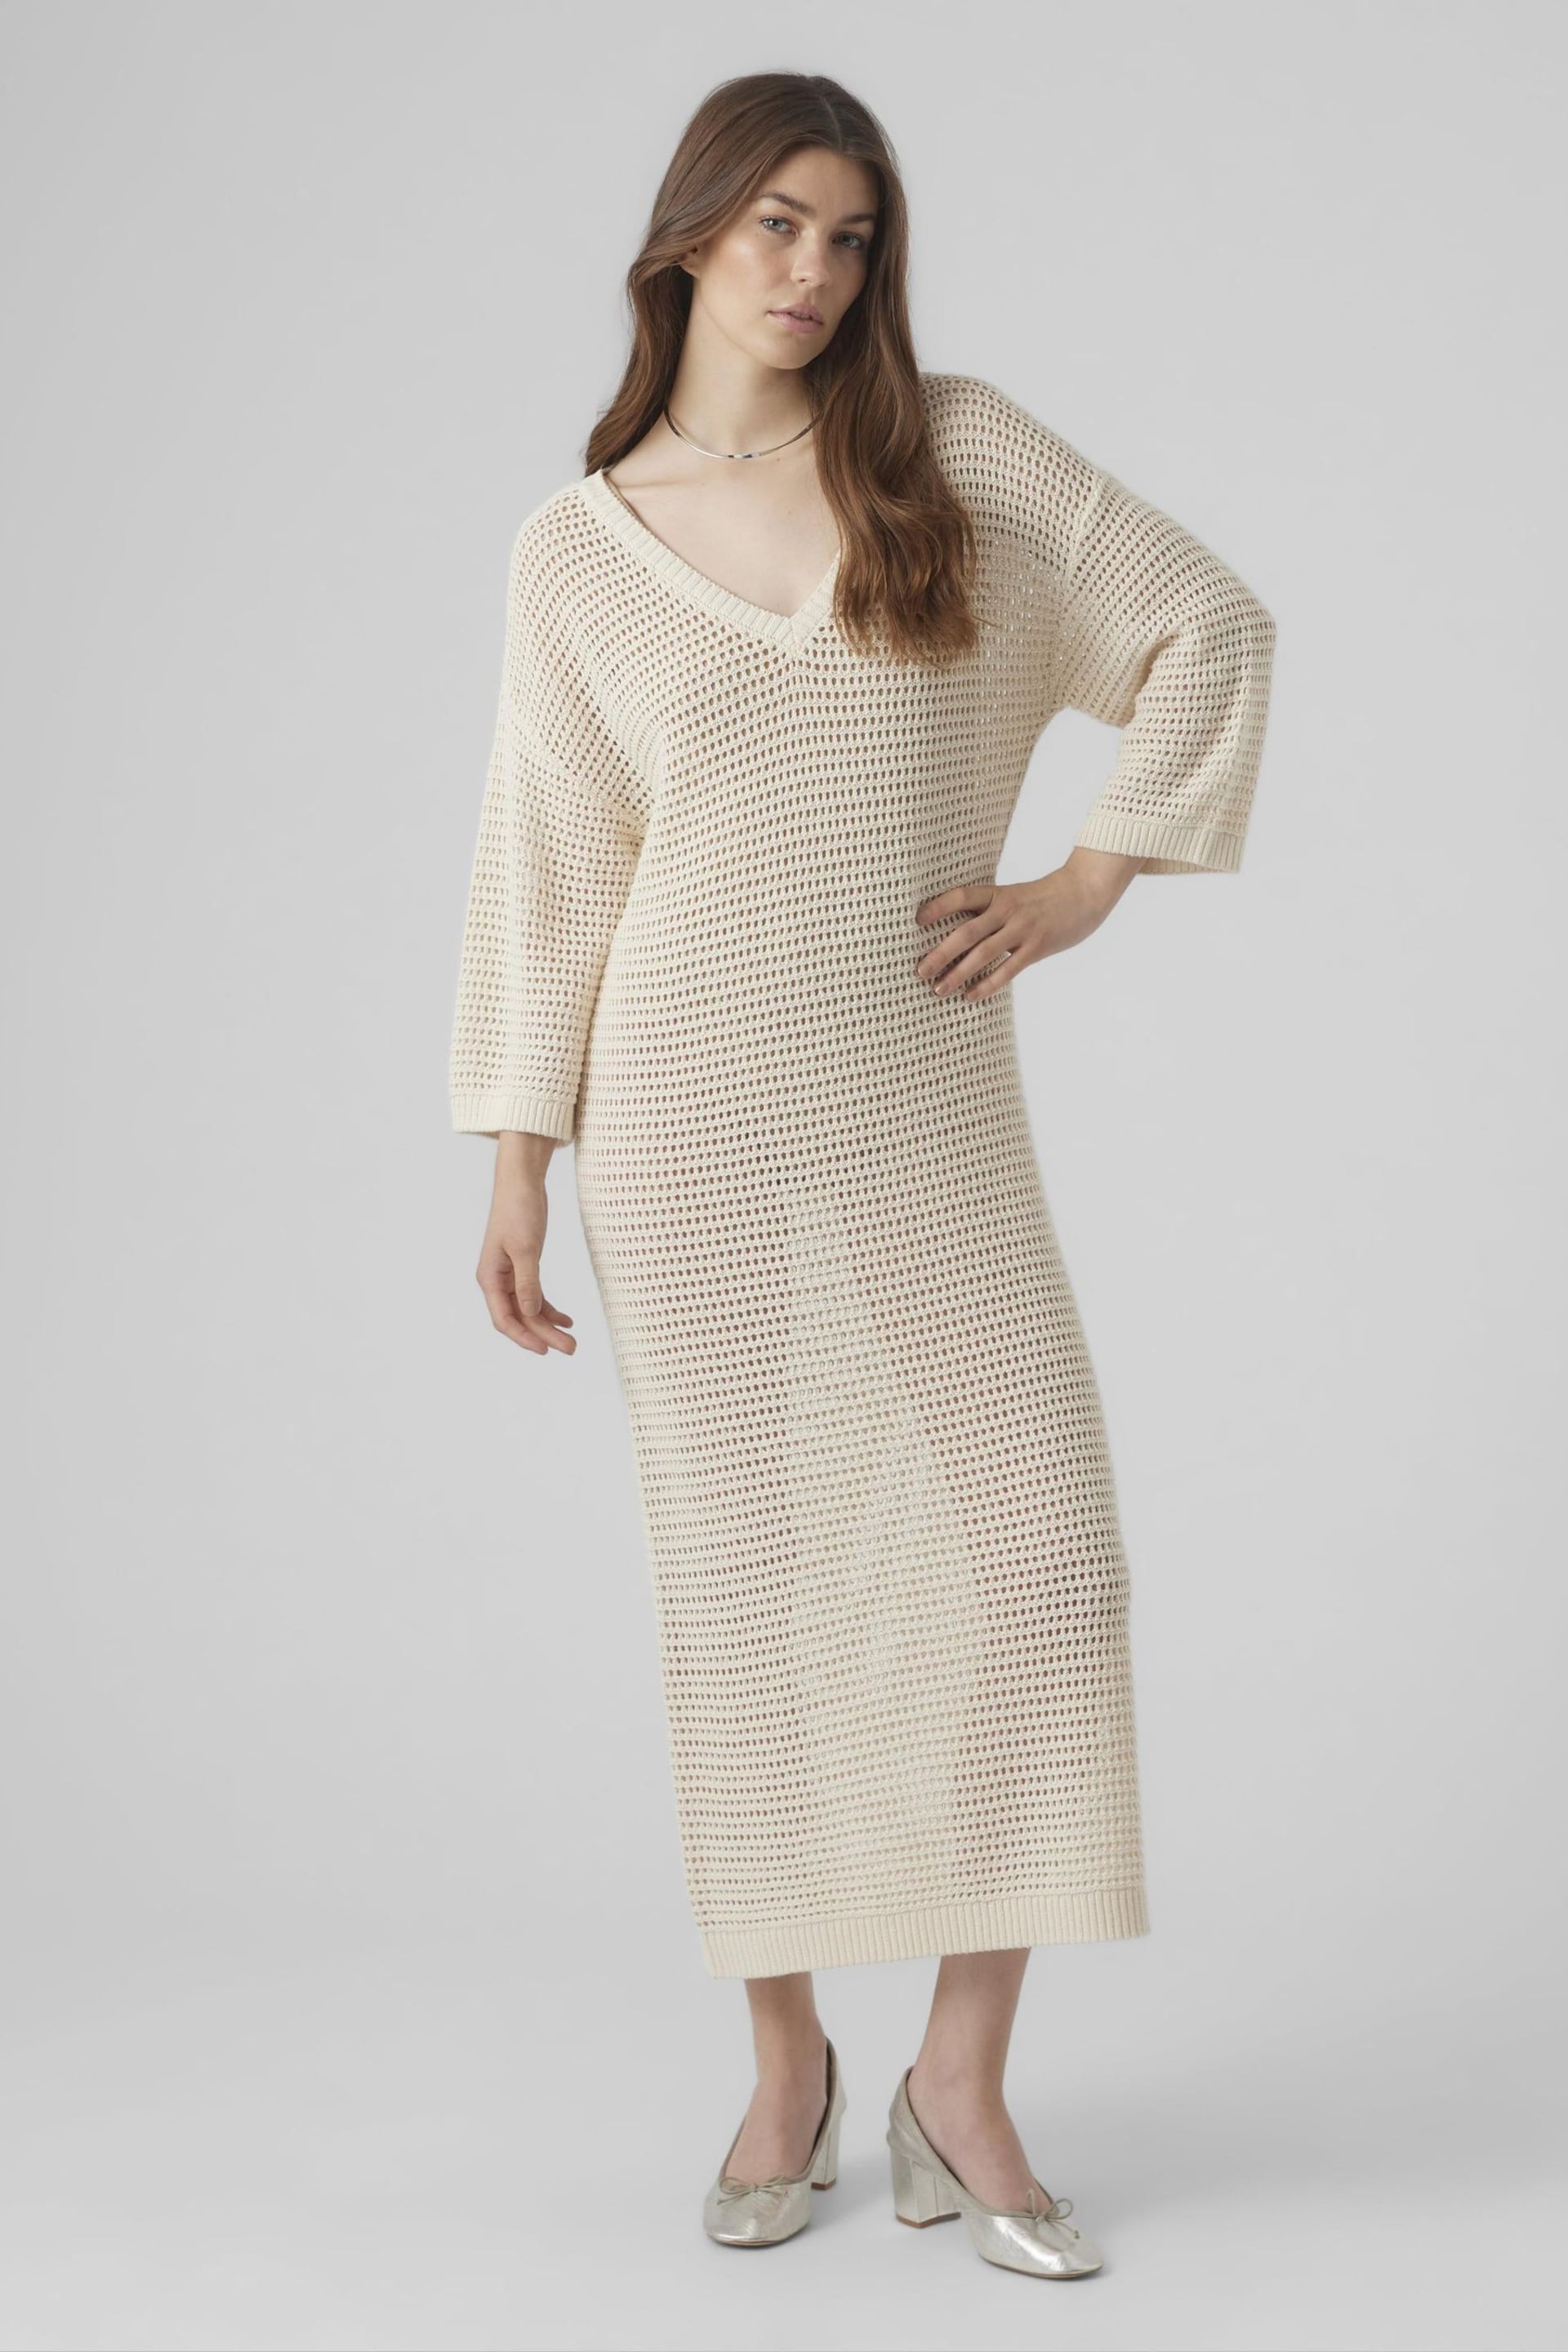 VERO MODA Cream Long Sleeve Crochet Beach Dress - Image 1 of 4